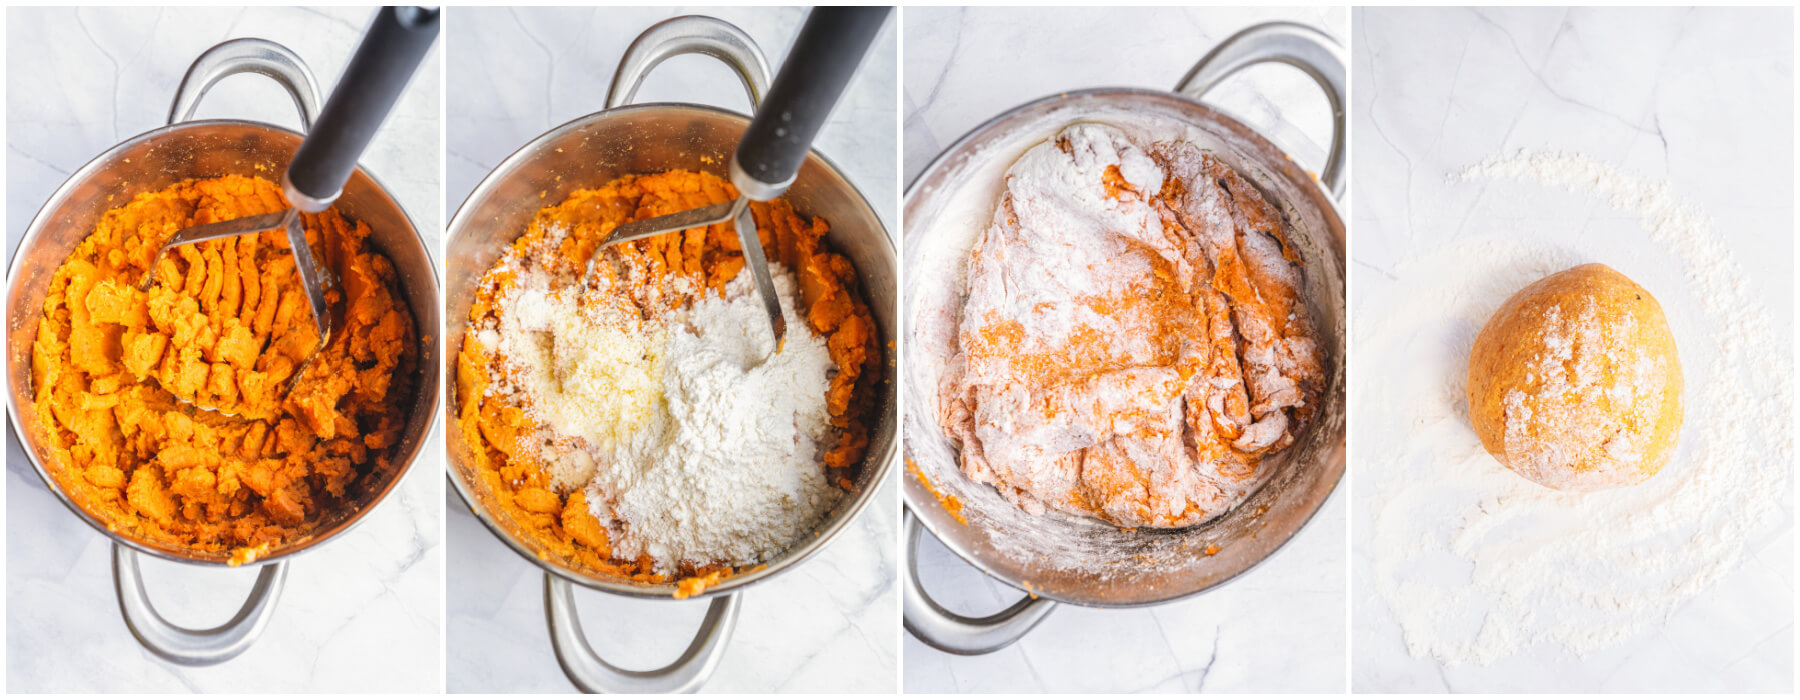 Process images showing how to mix up sweet potato gnocchi dough.